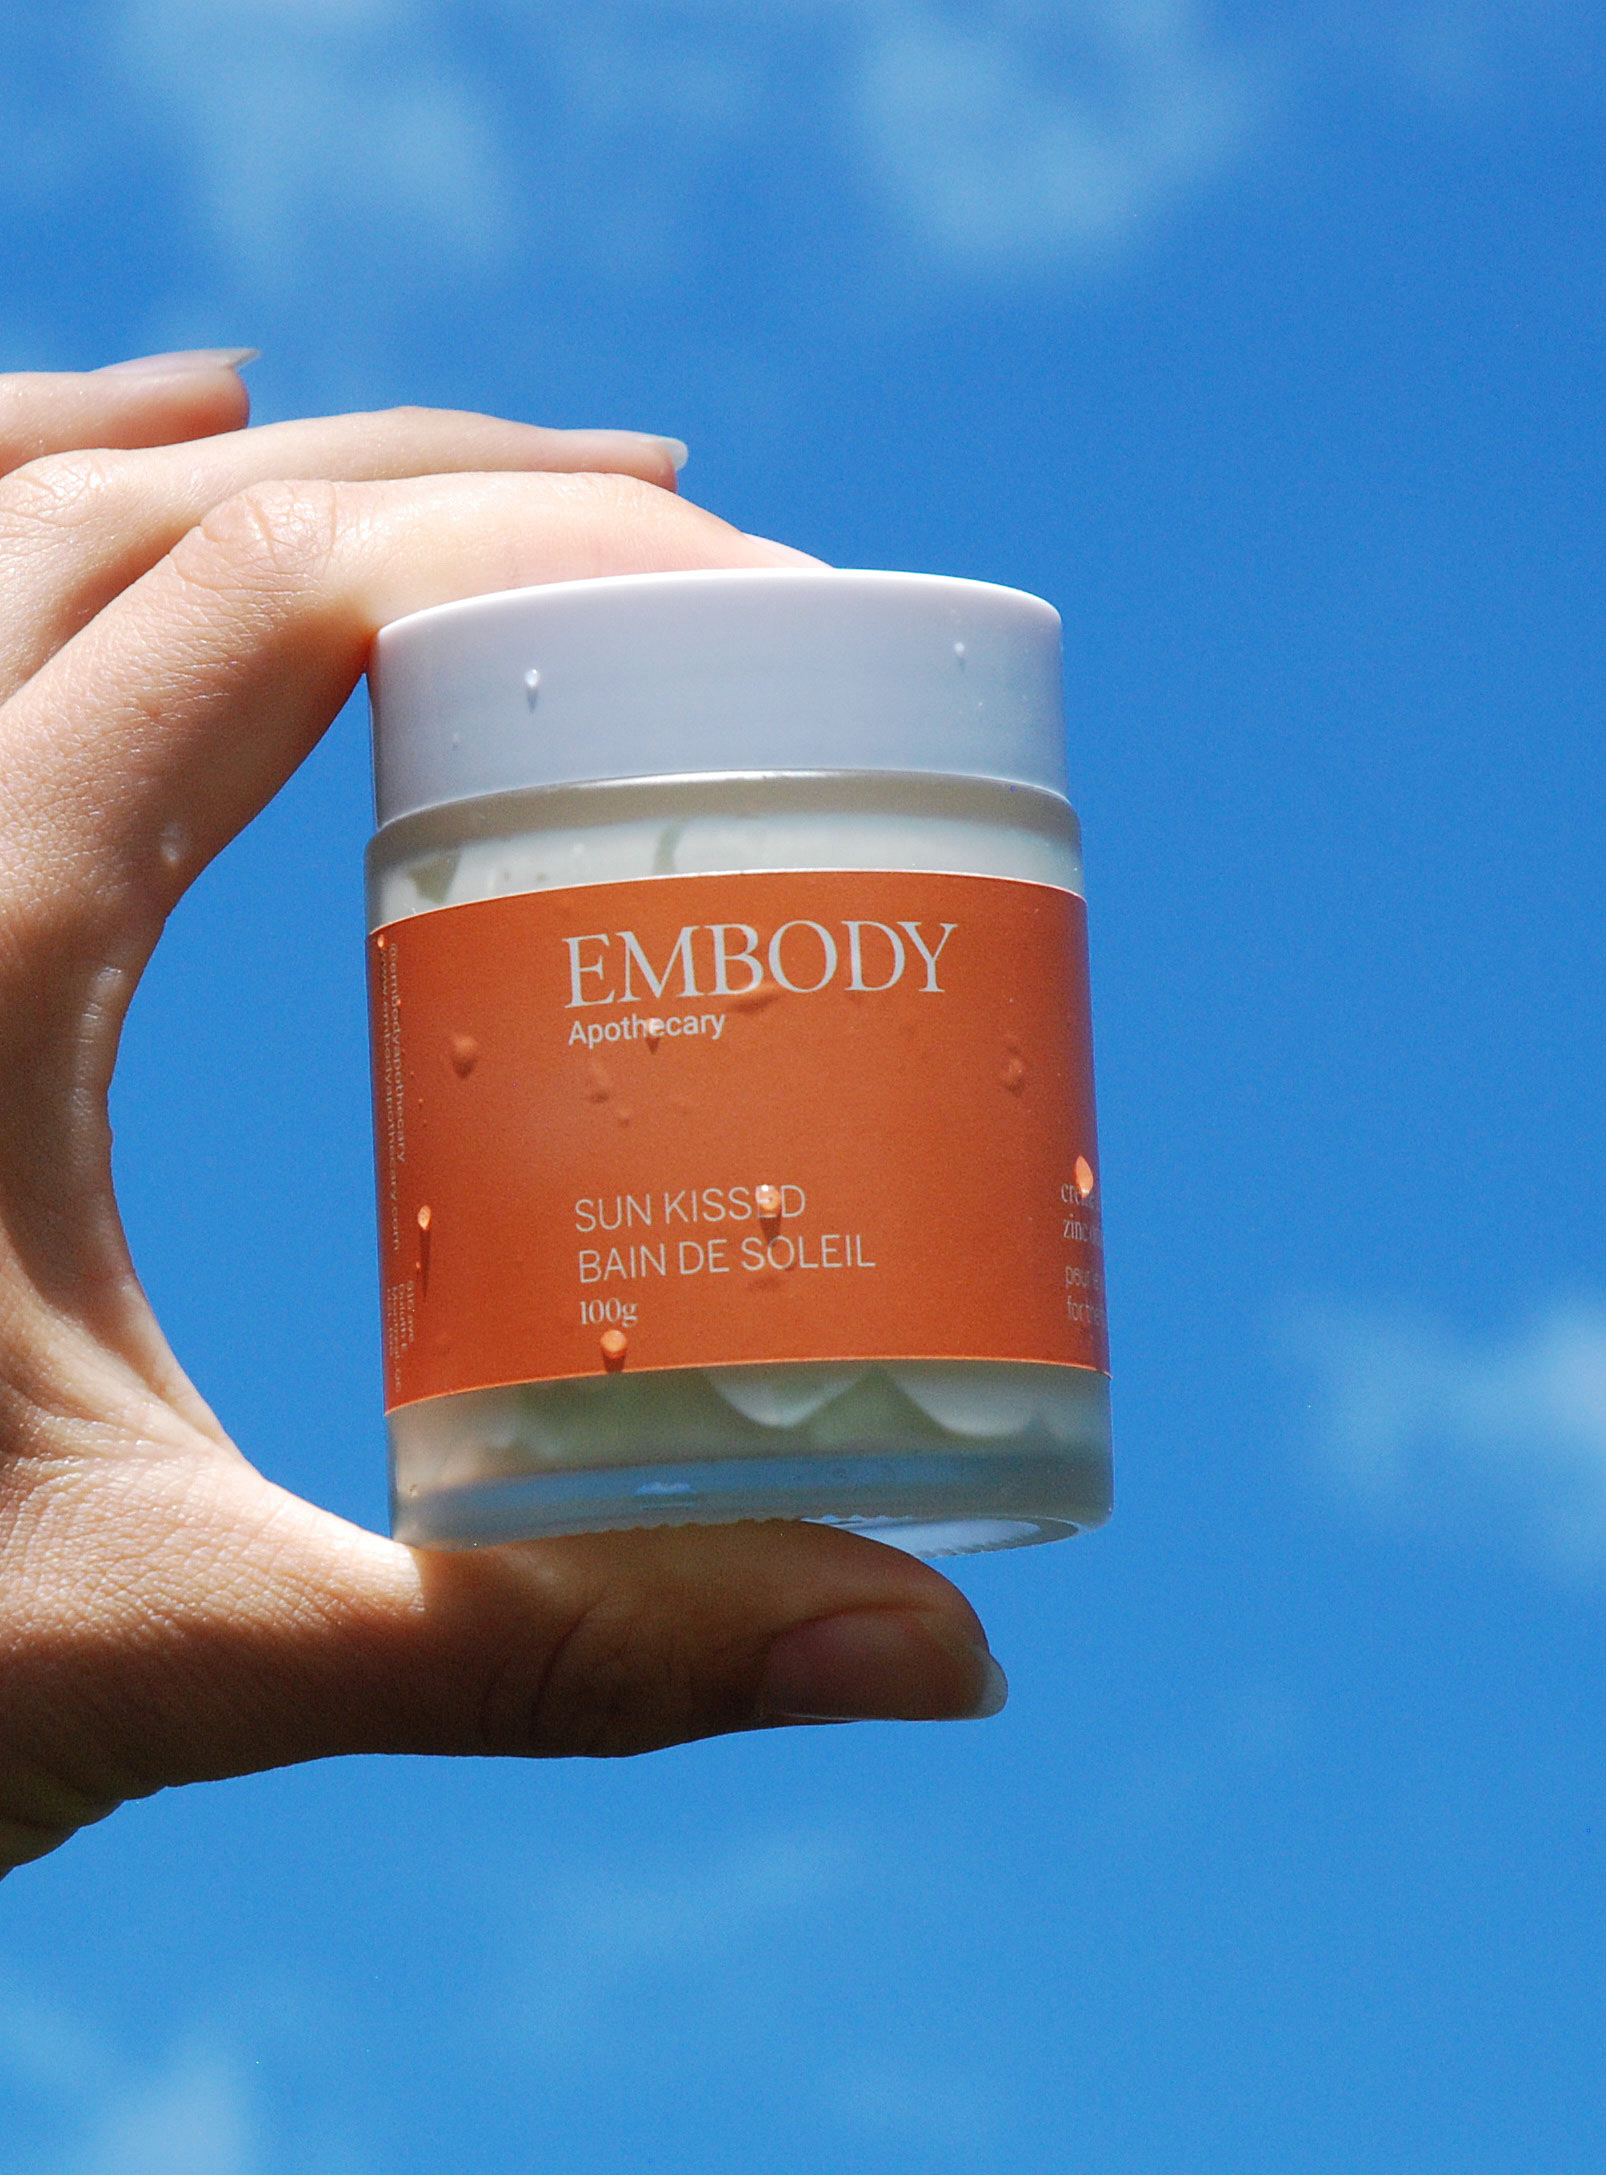 Embody Apothecary - Sun Kissed cream